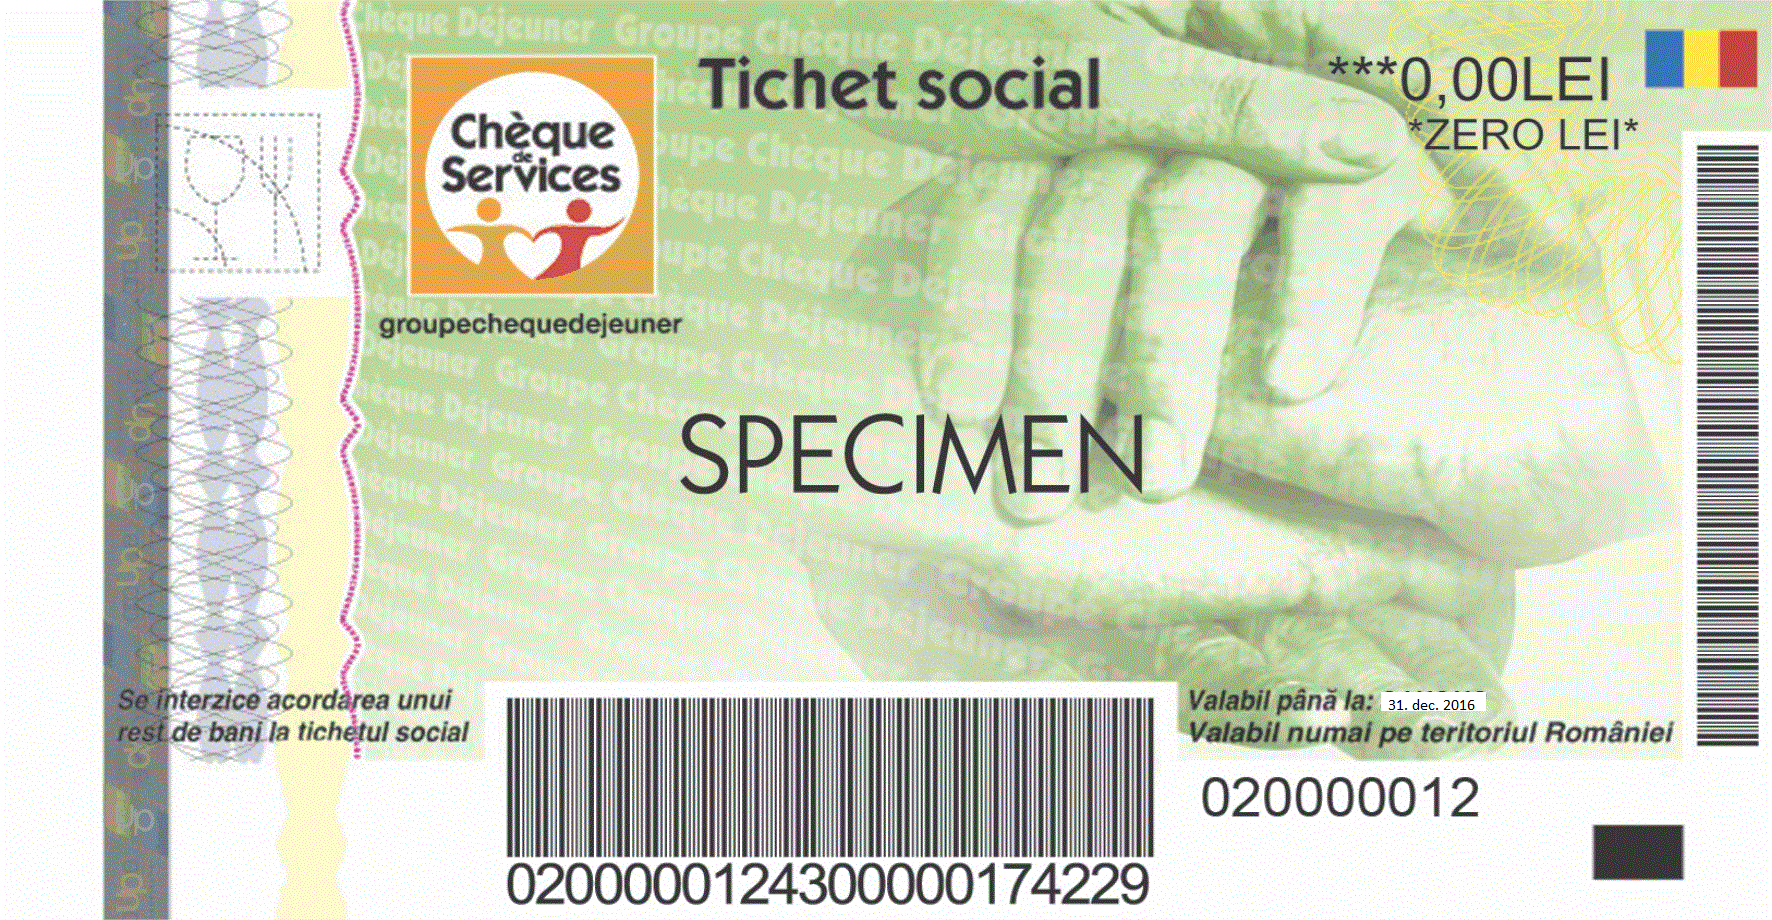 2013-specimen-tichet-social